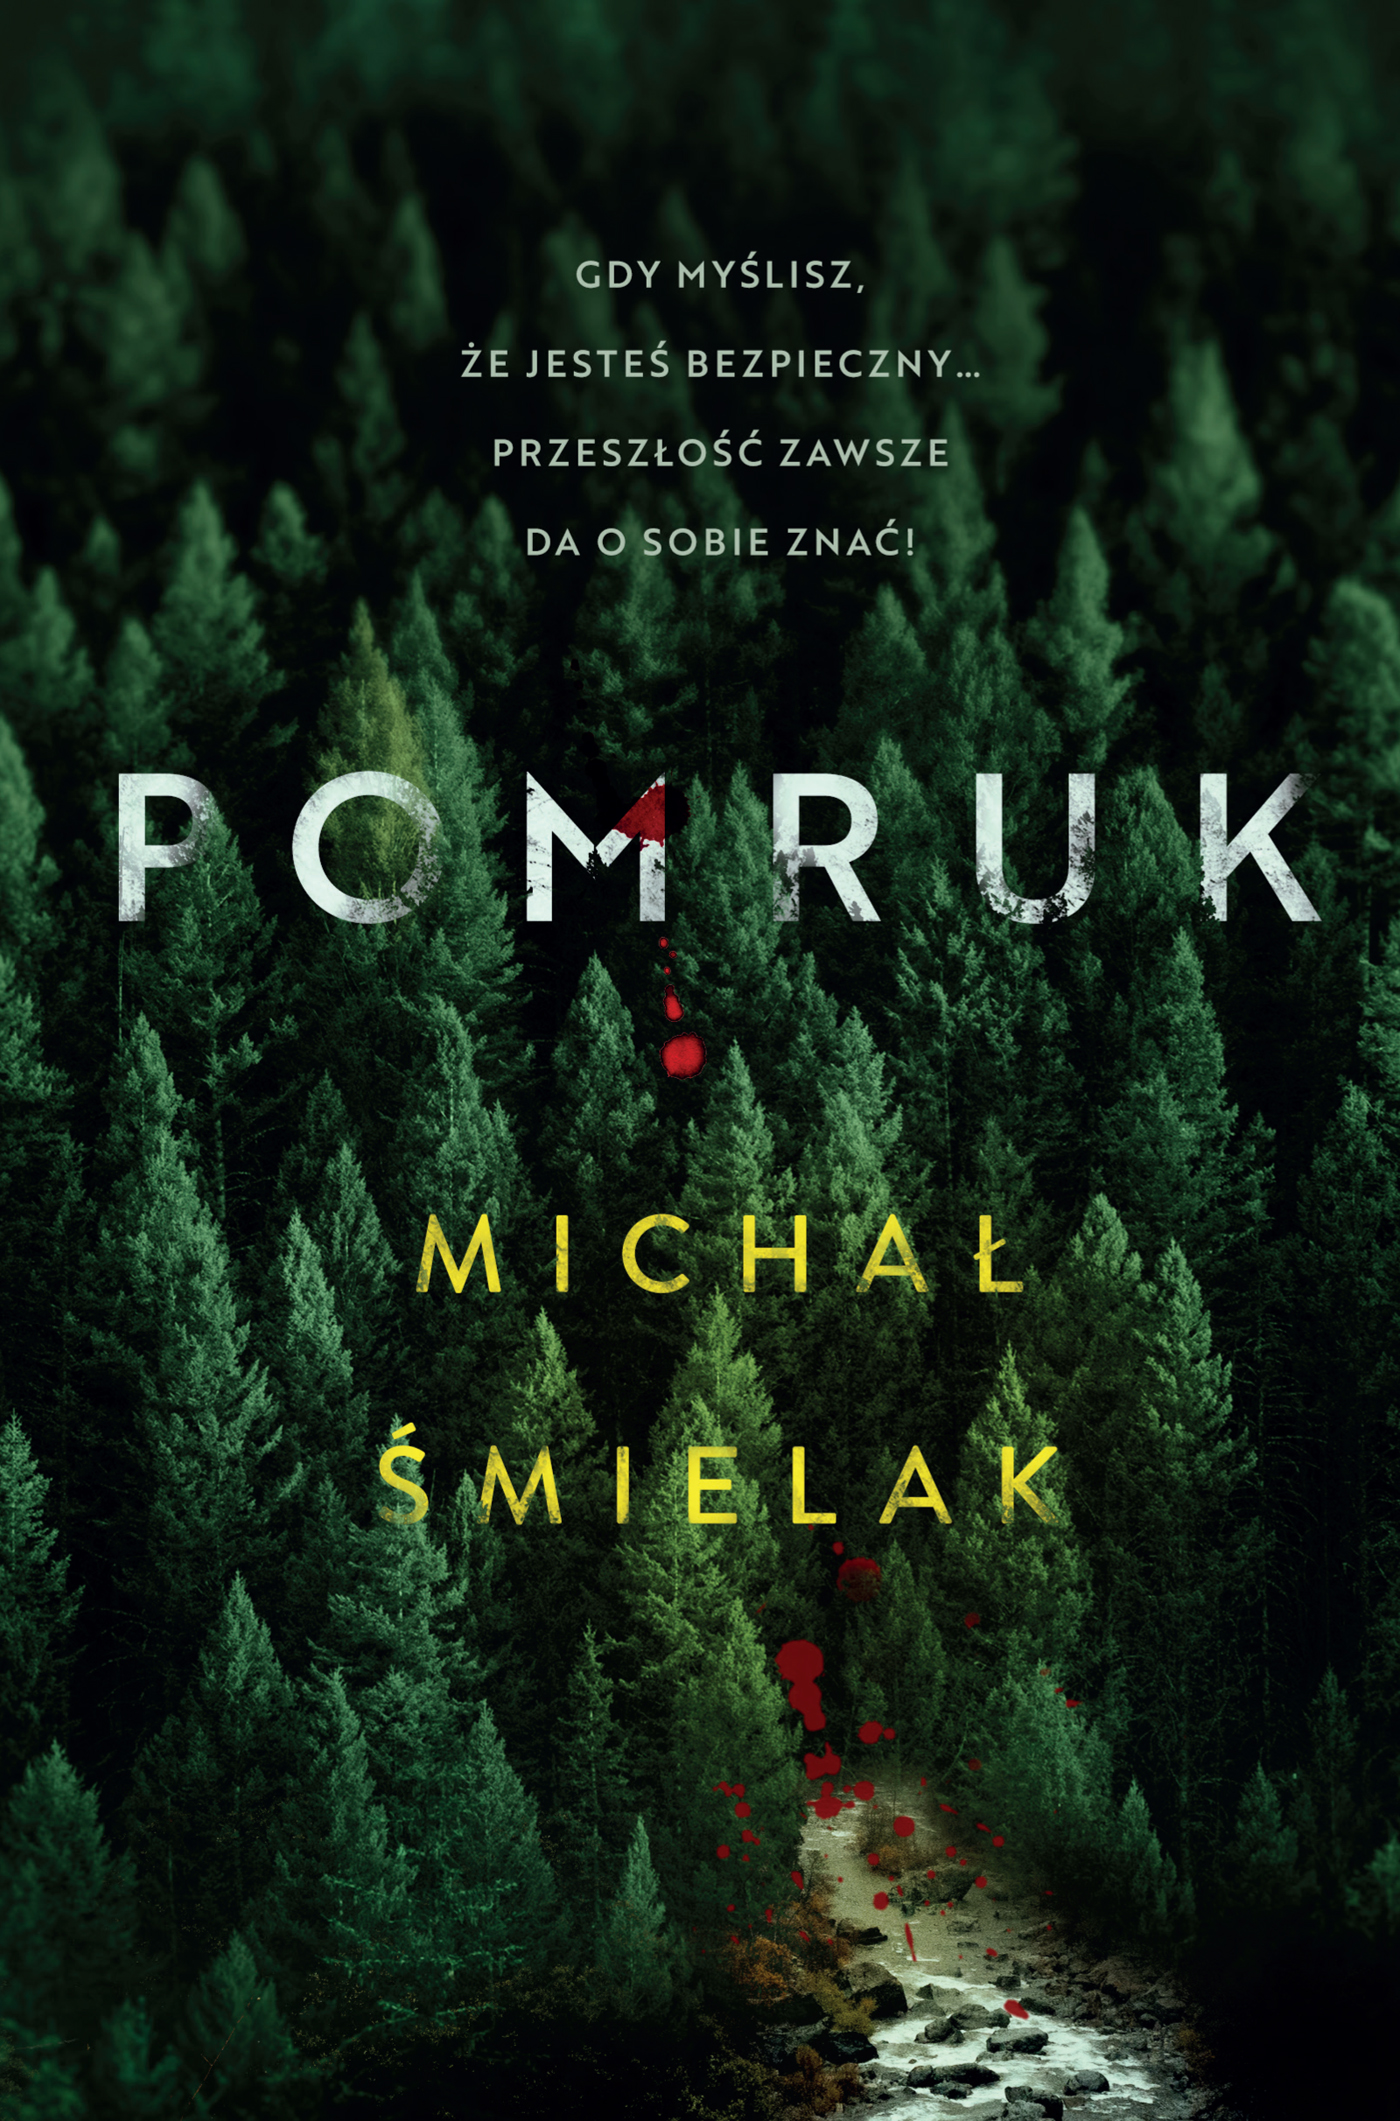 Pomruk – Michał Śmielak